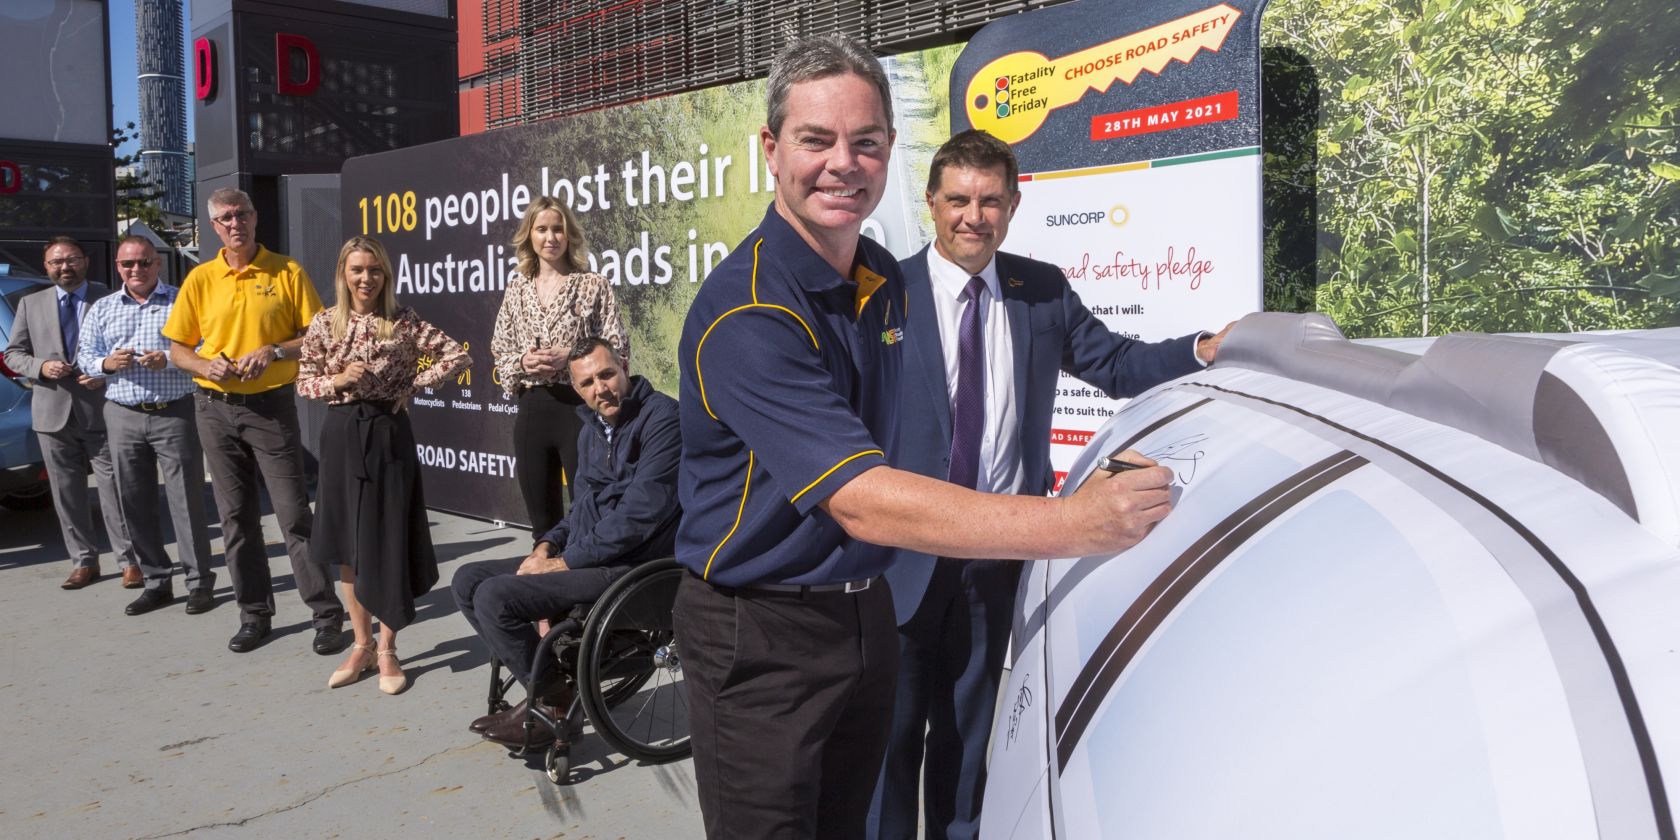 Suncorp partner Australian Road Safety Foundation sees 100,000+ pledges to #ChooseRoadSafety 